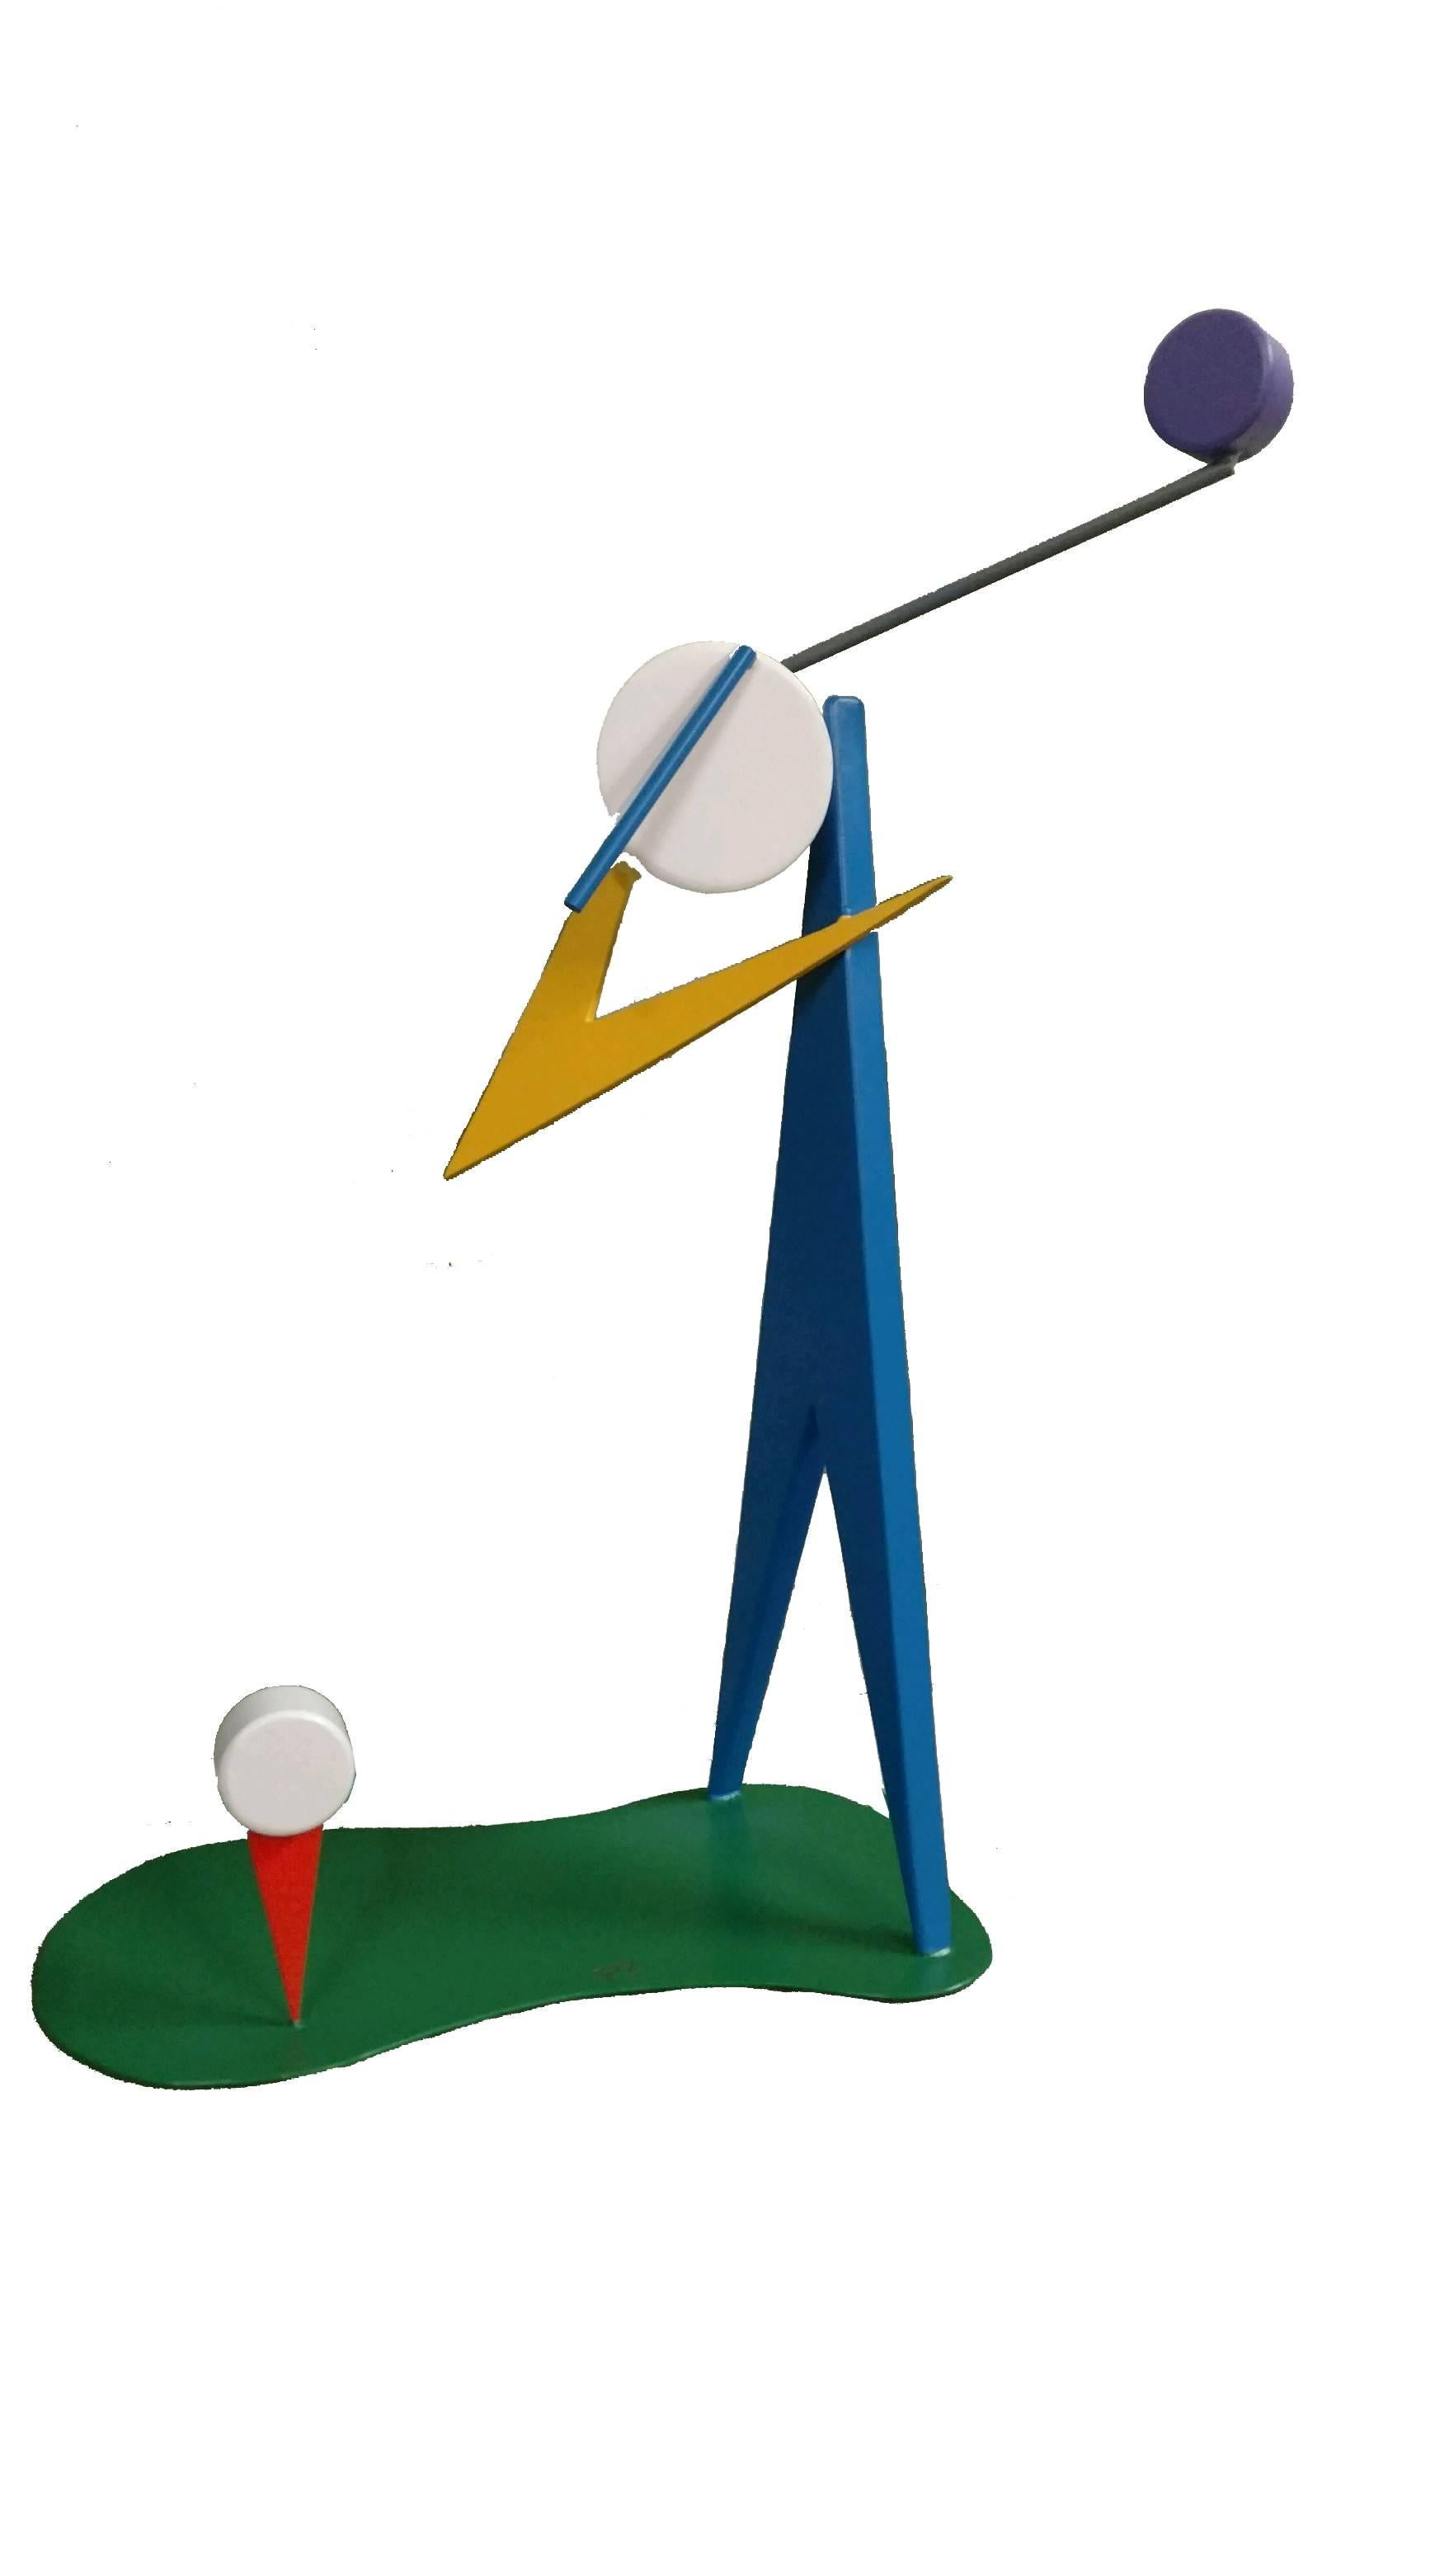 The Golfer - Sculpture by Peter Zorzenon